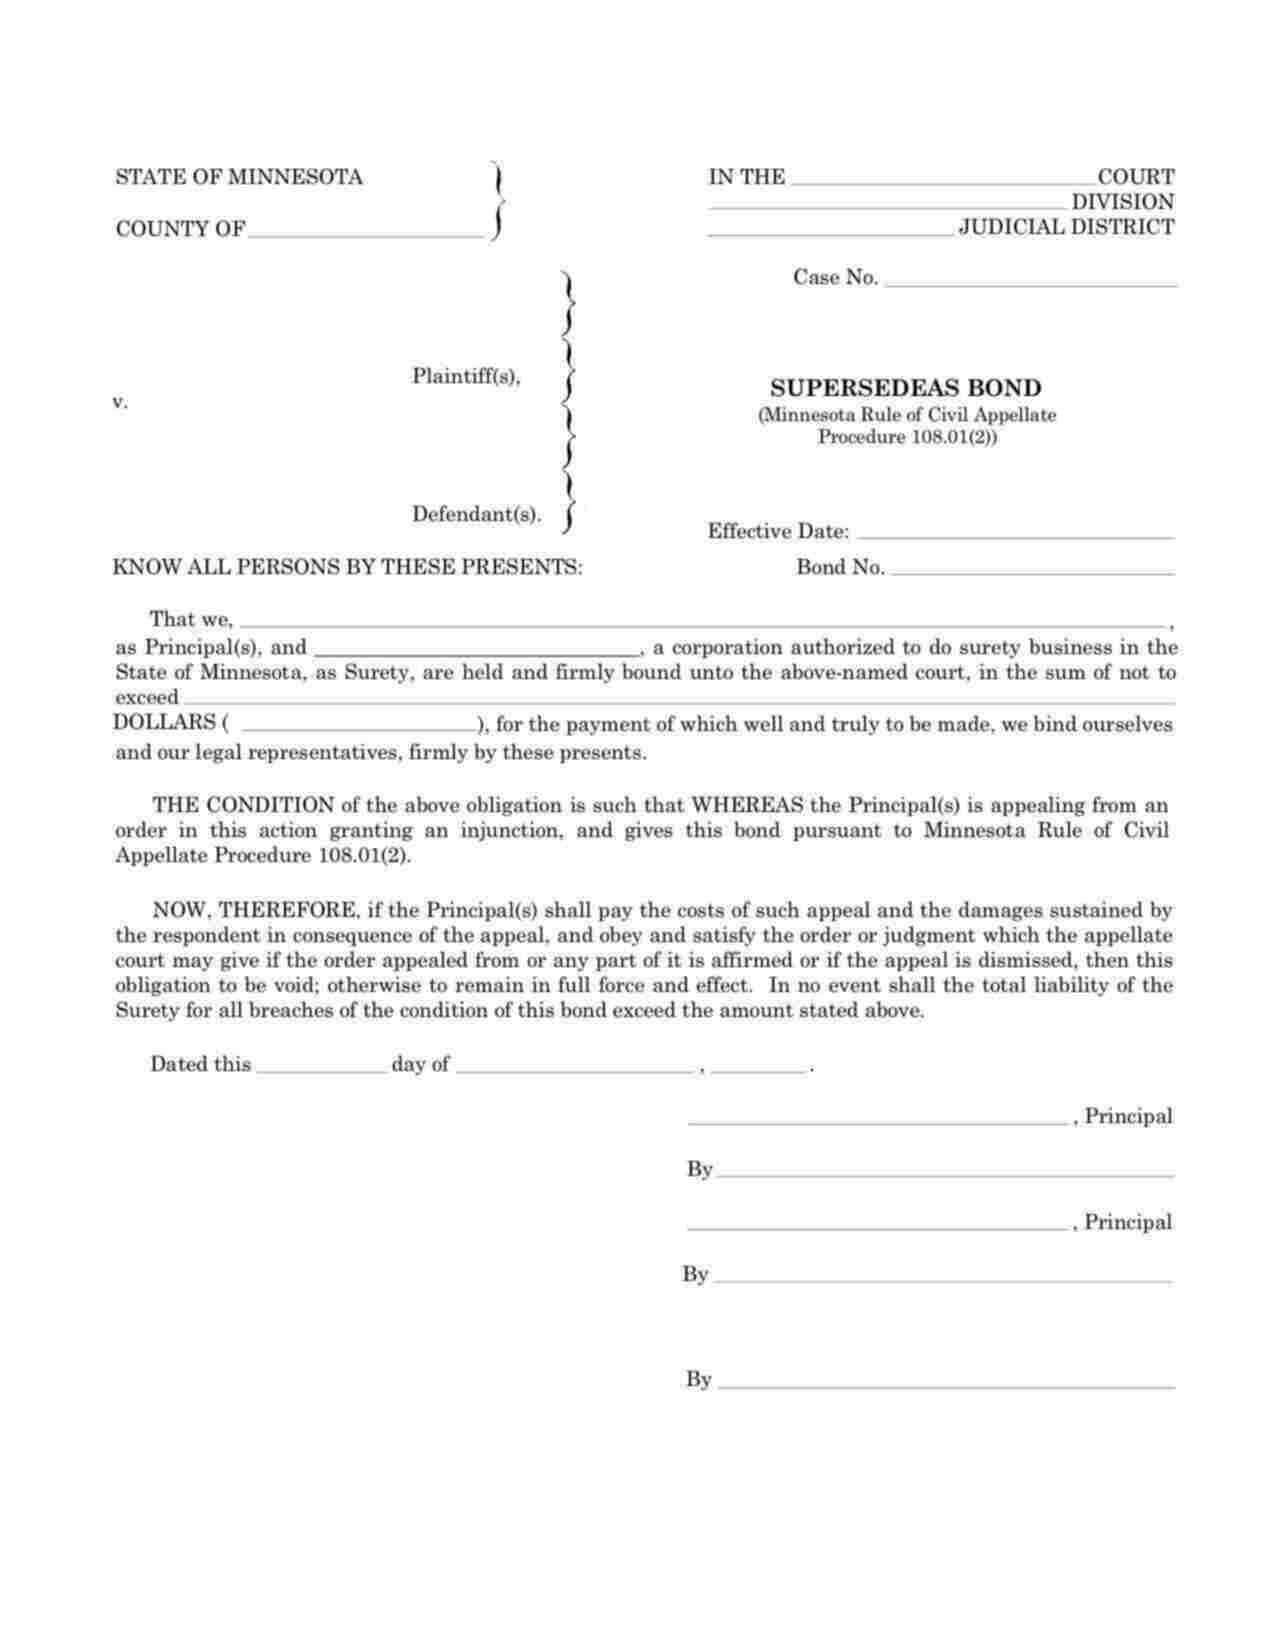 Minnesota Supersedeas - Injunction Bond Form